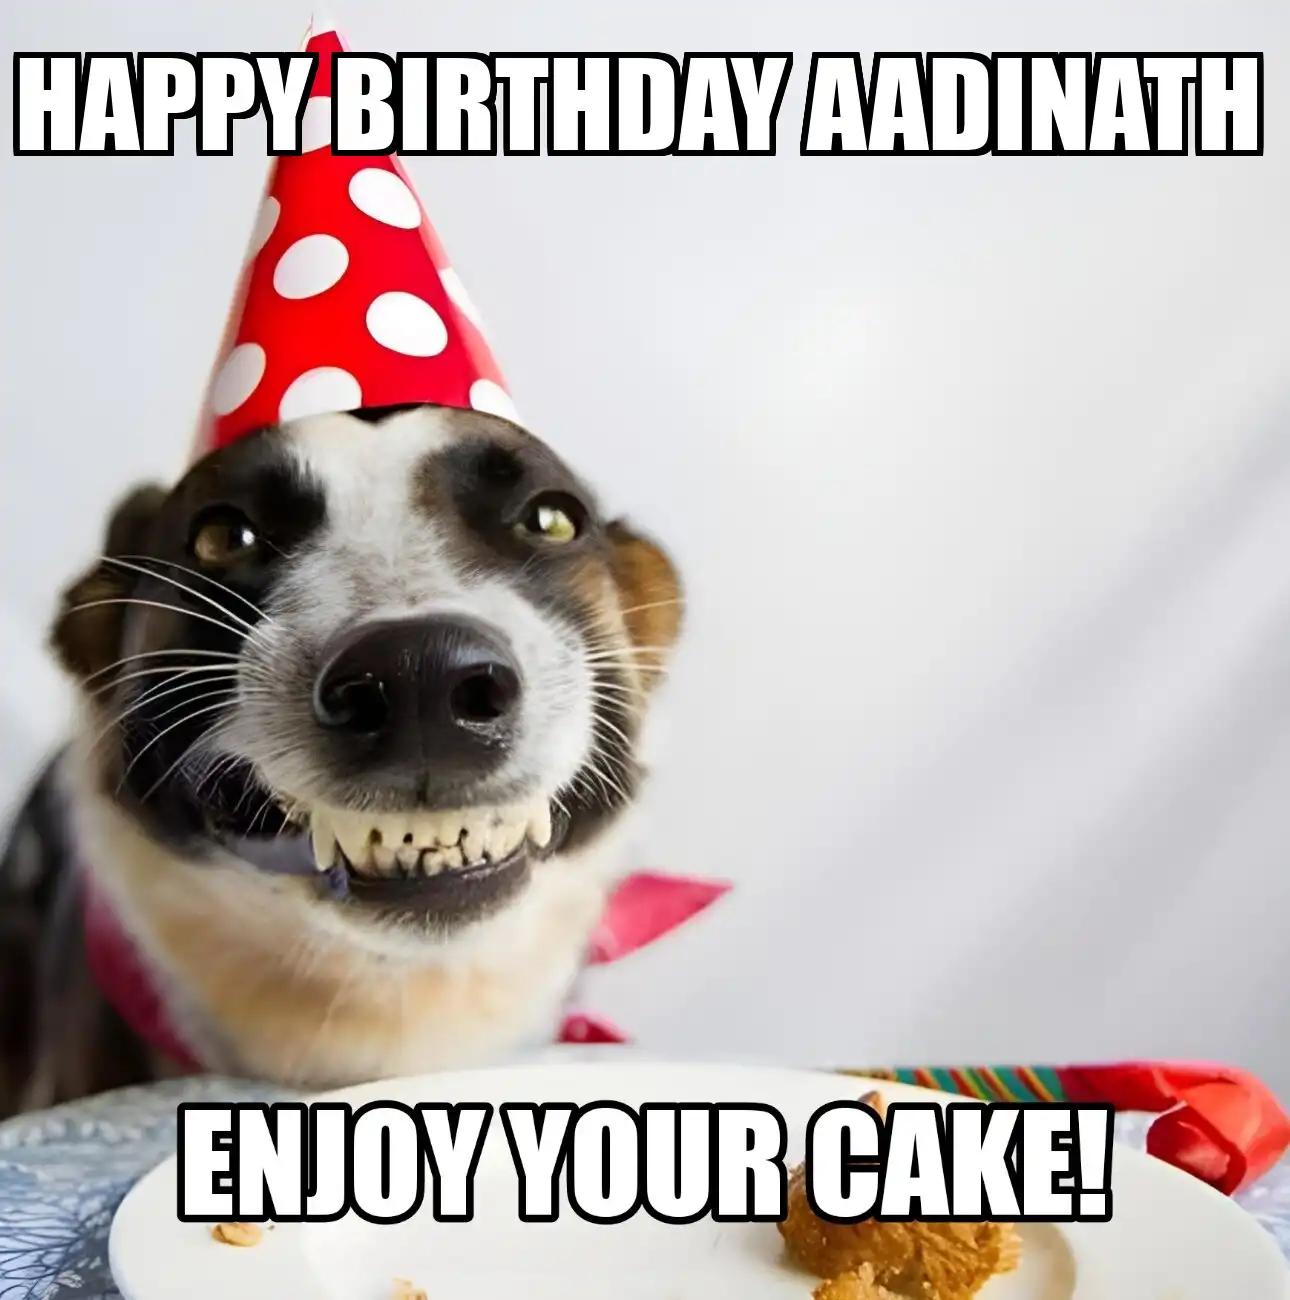 Happy Birthday Aadinath Enjoy Your Cake Dog Meme